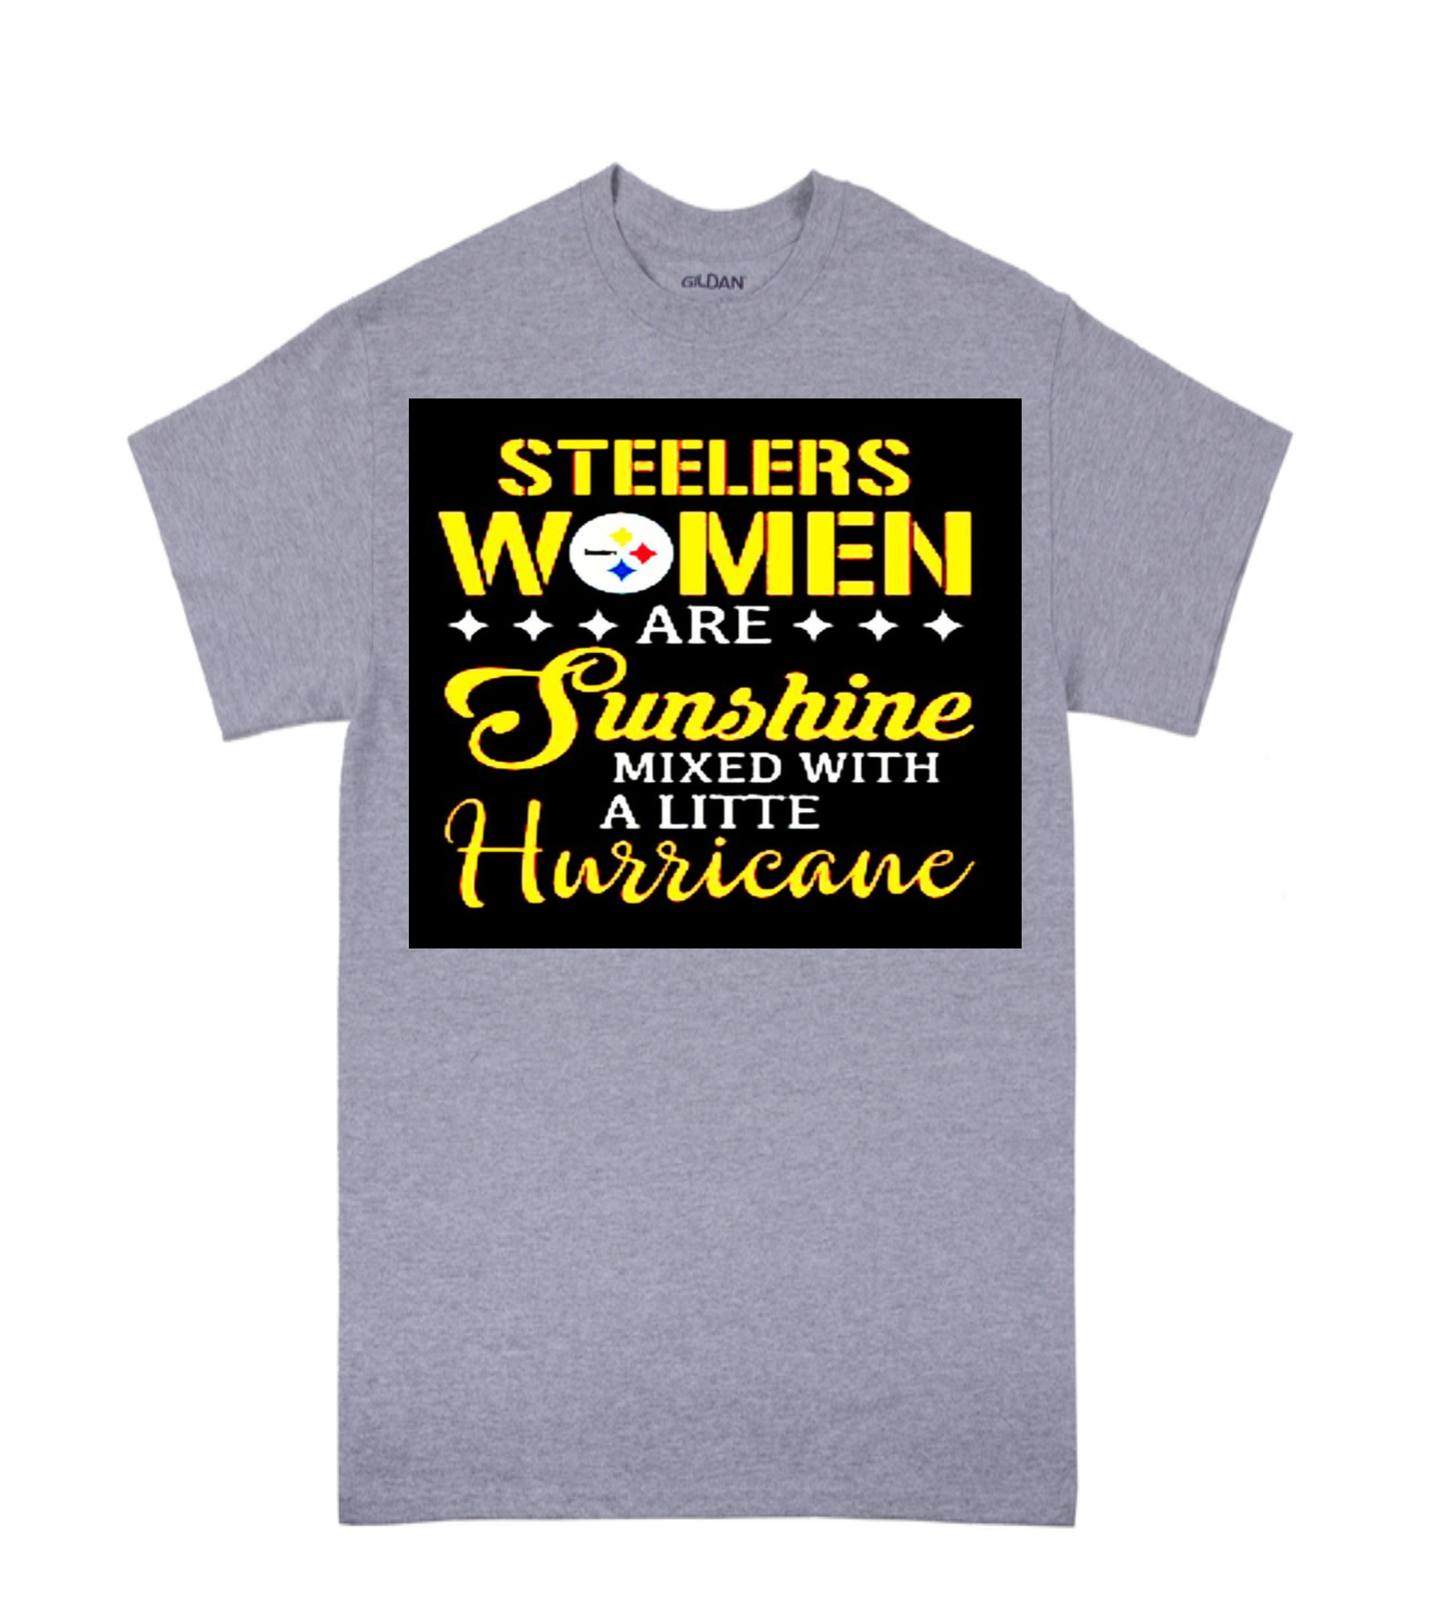 Pitt. Football Adult & Youth T-shirts